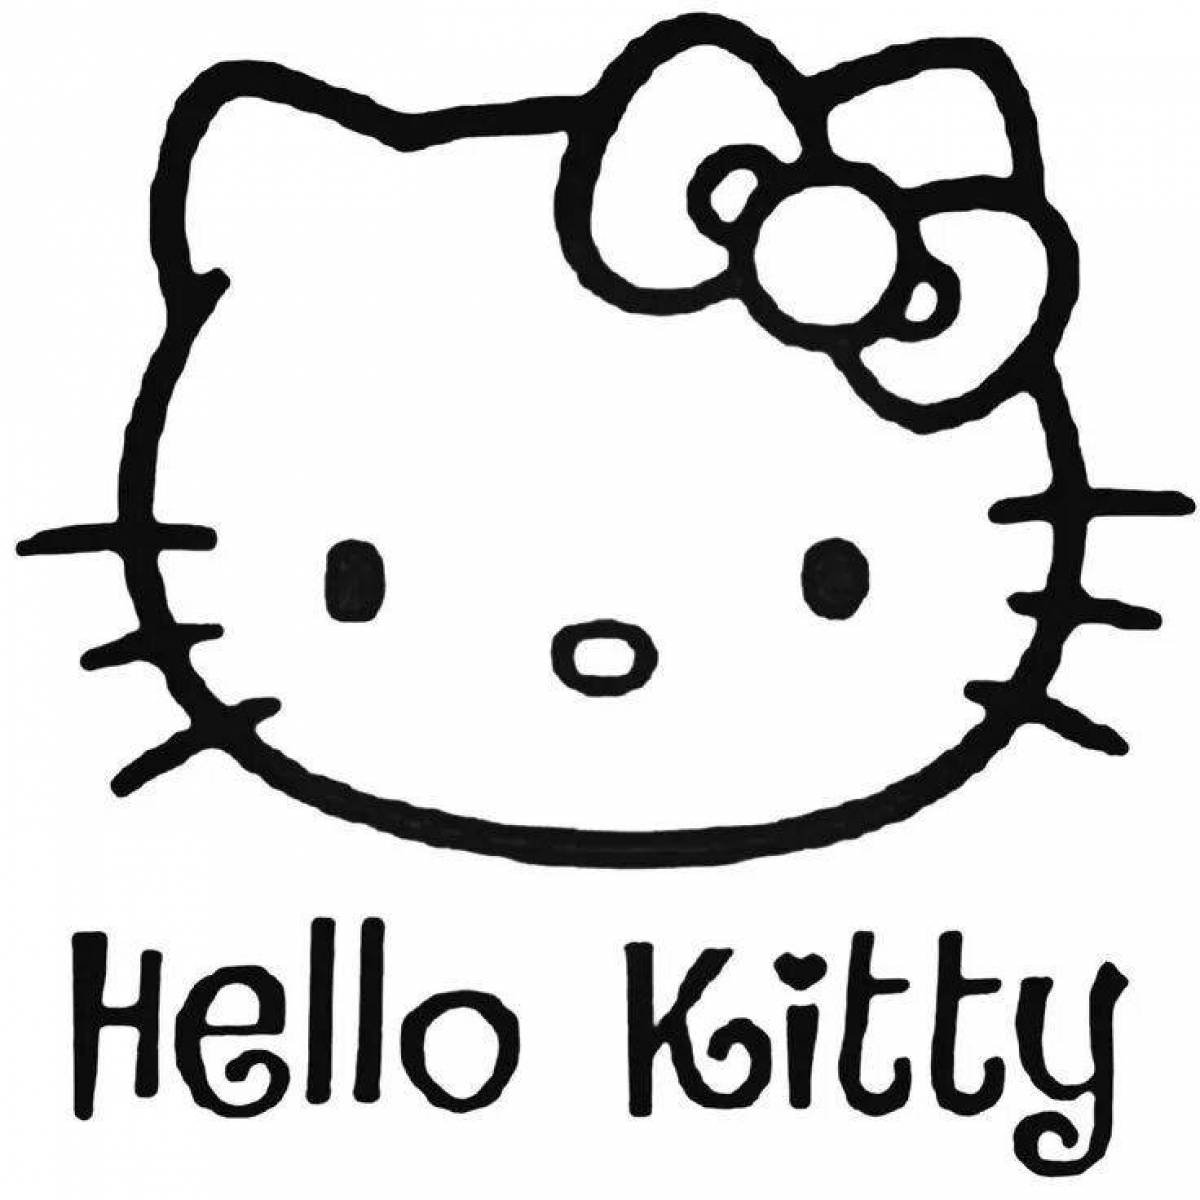 Хеллоу китти рот. [Tllj rbnb. Хеллоу Китти. Хеллоу Китти hello Kitty hello Kitty. Hello Kitty Хелло Китти.